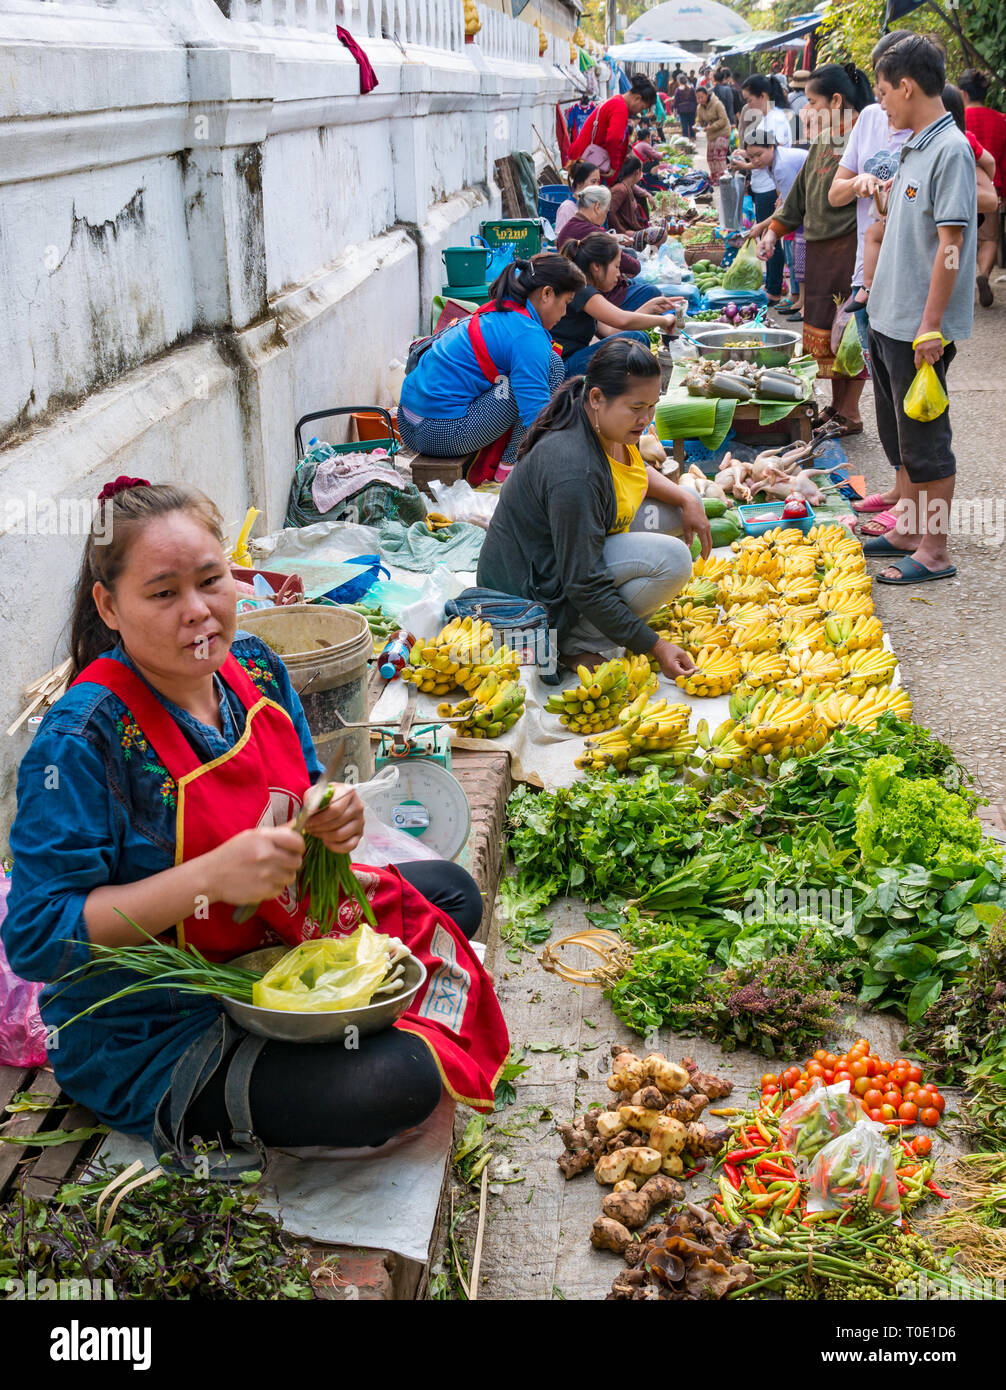 Le donne la vendita di verdura, mattina street market alimentare, Luang Prabang, Laos, SE Asia Foto Stock